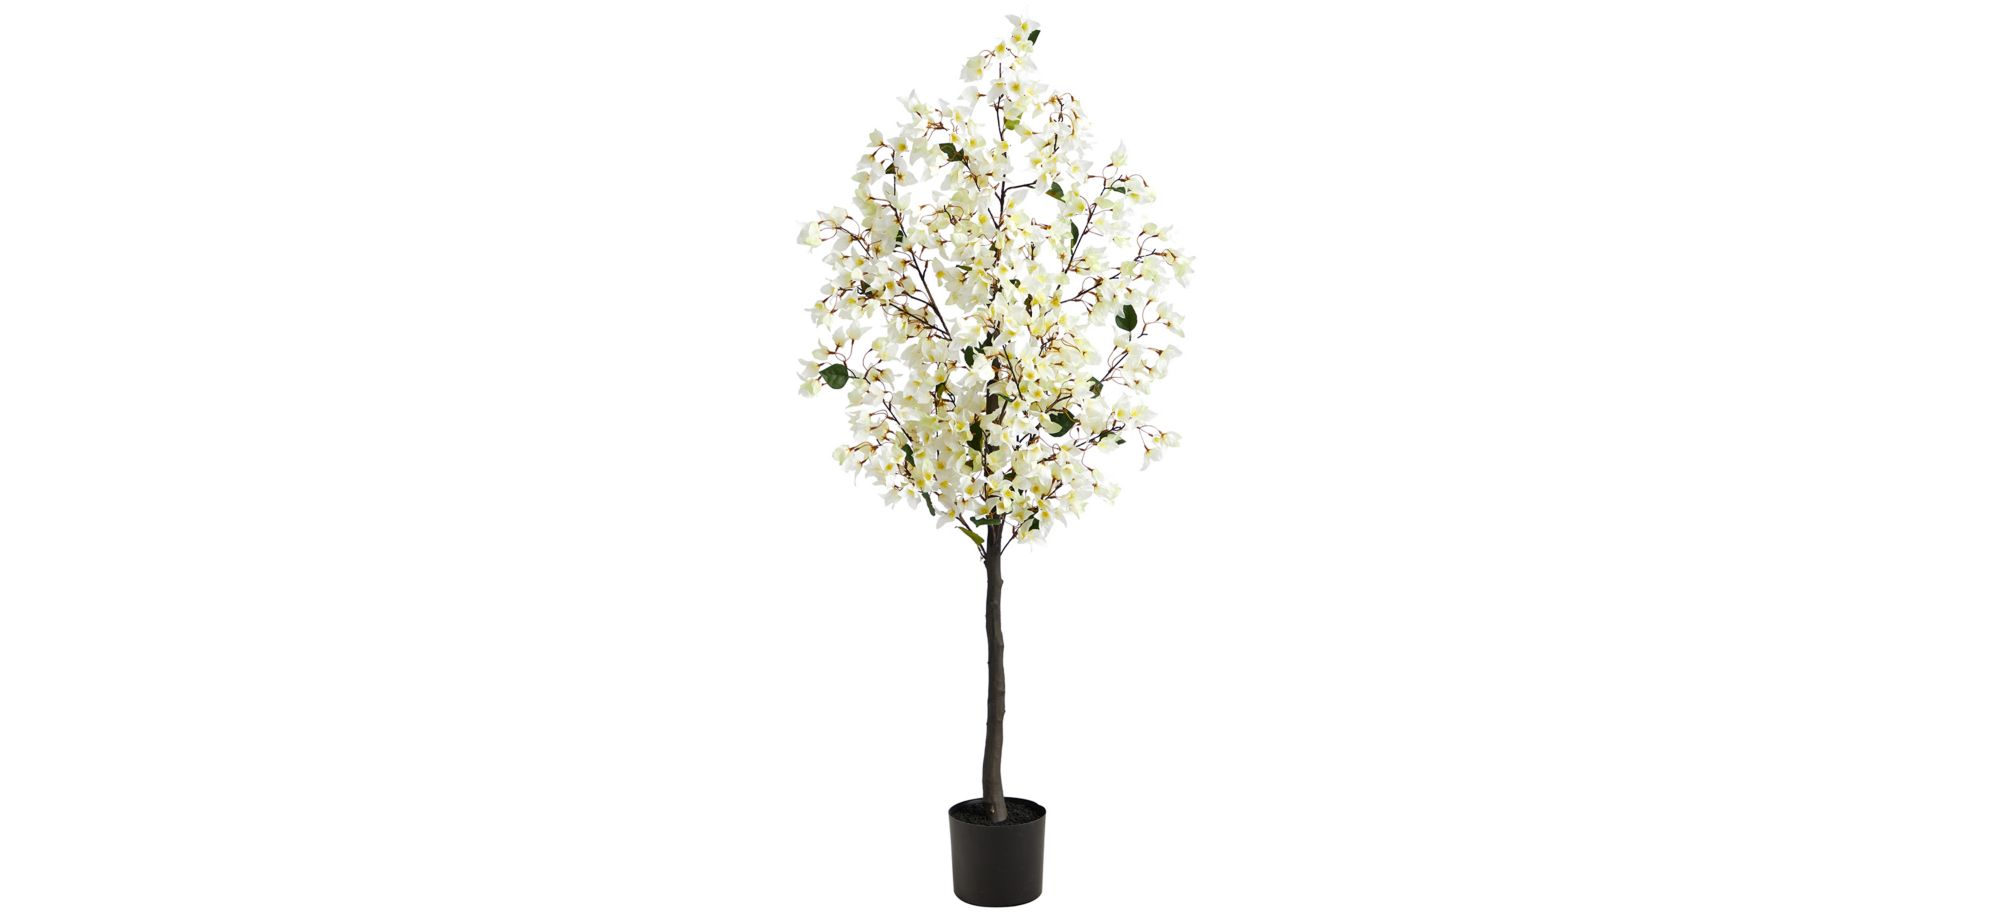 5' Bougainvillea Artificial Tree in White by Bellanest